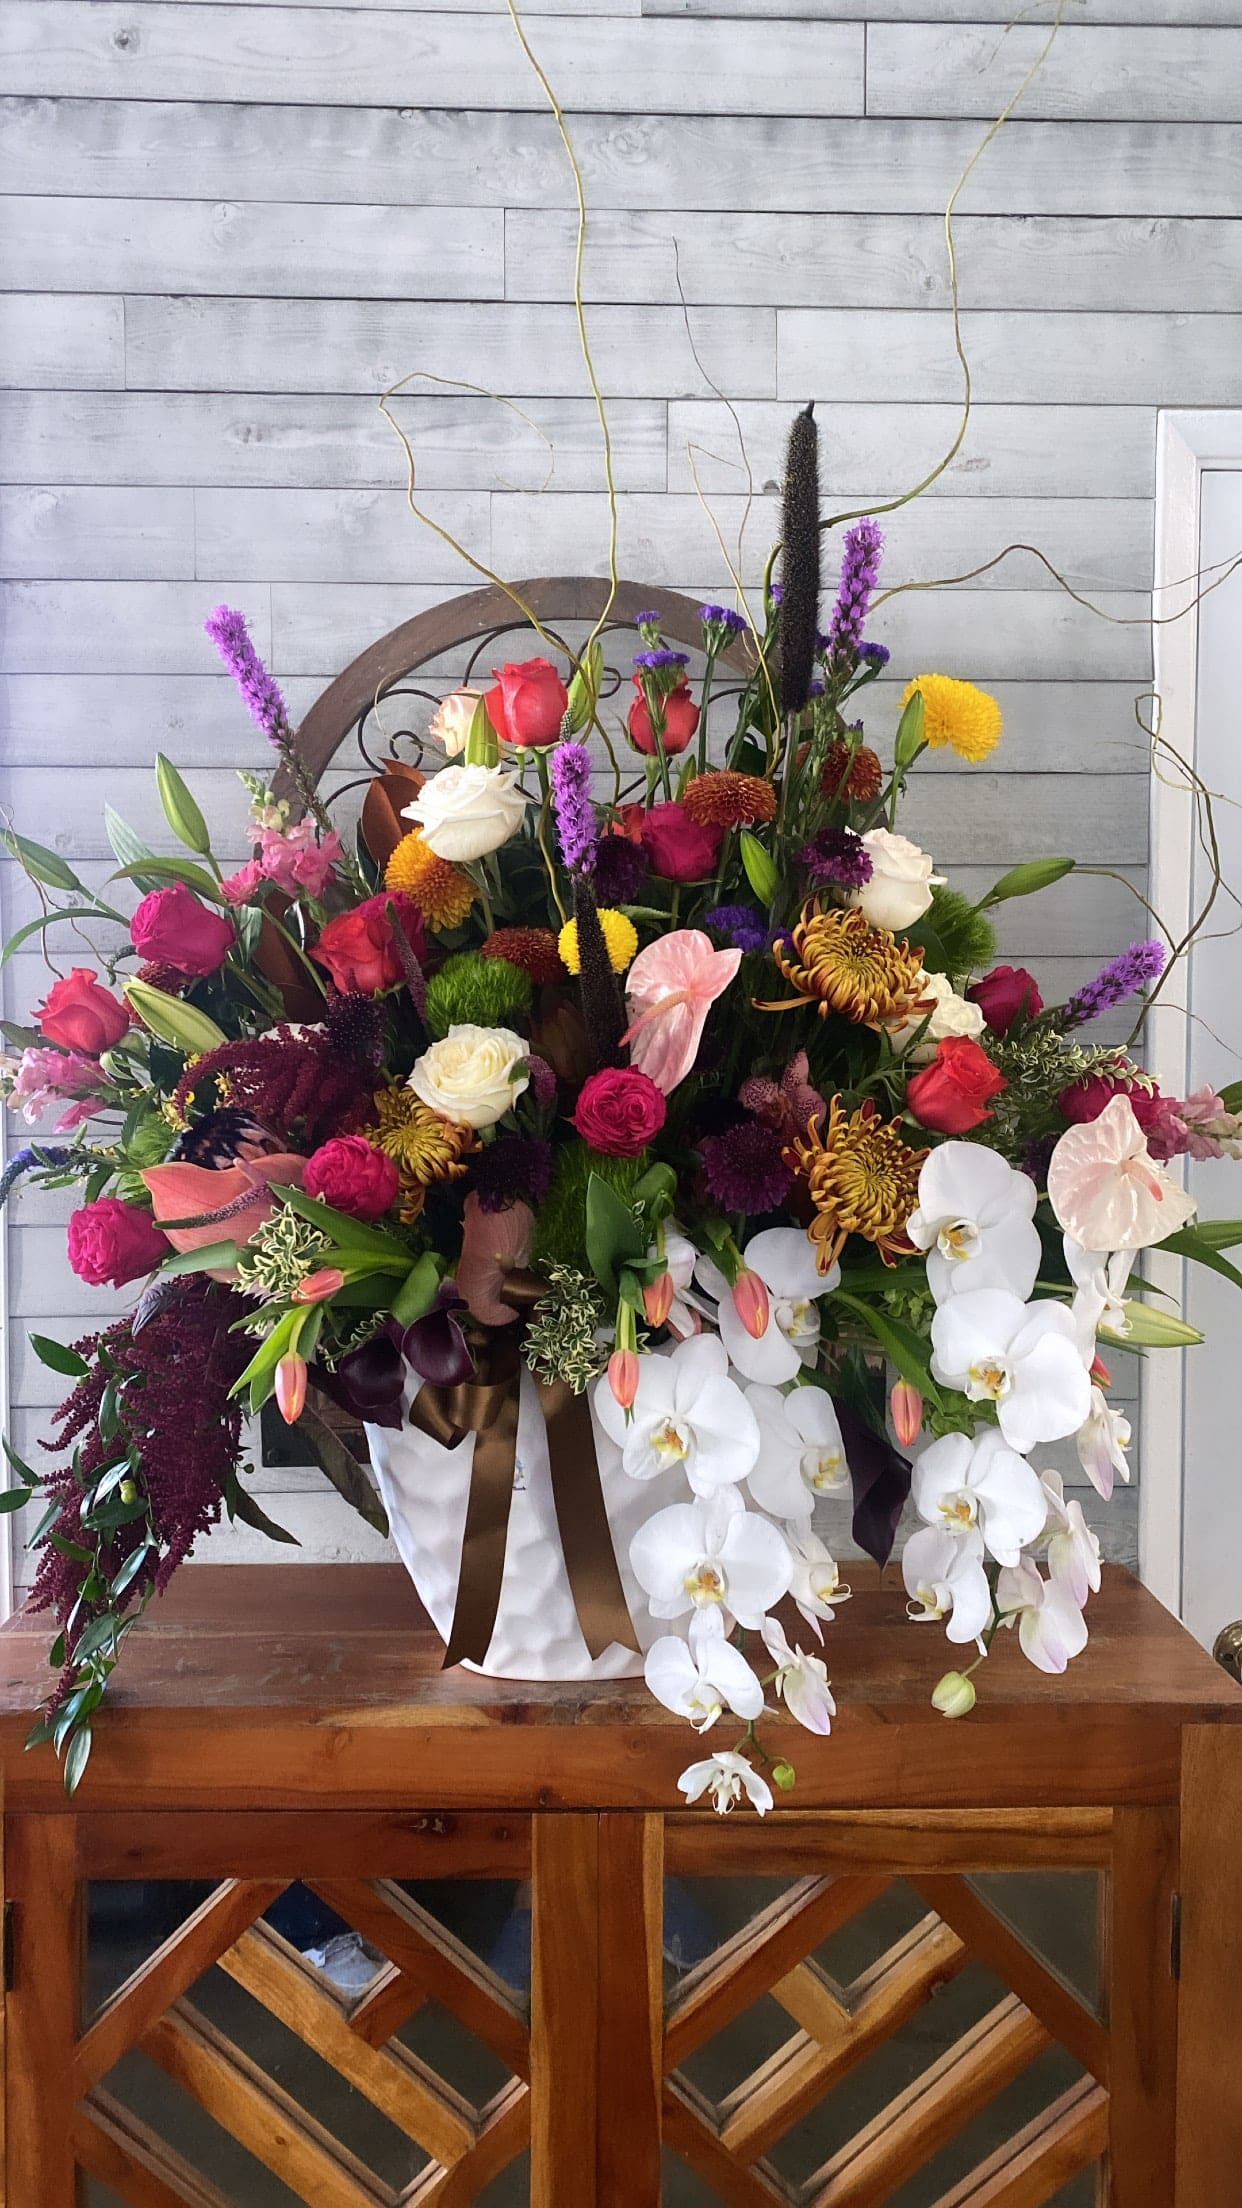 Jumbo Arrangesment - Stunning floral multicolor arrangement with phalaenopsis orchids.